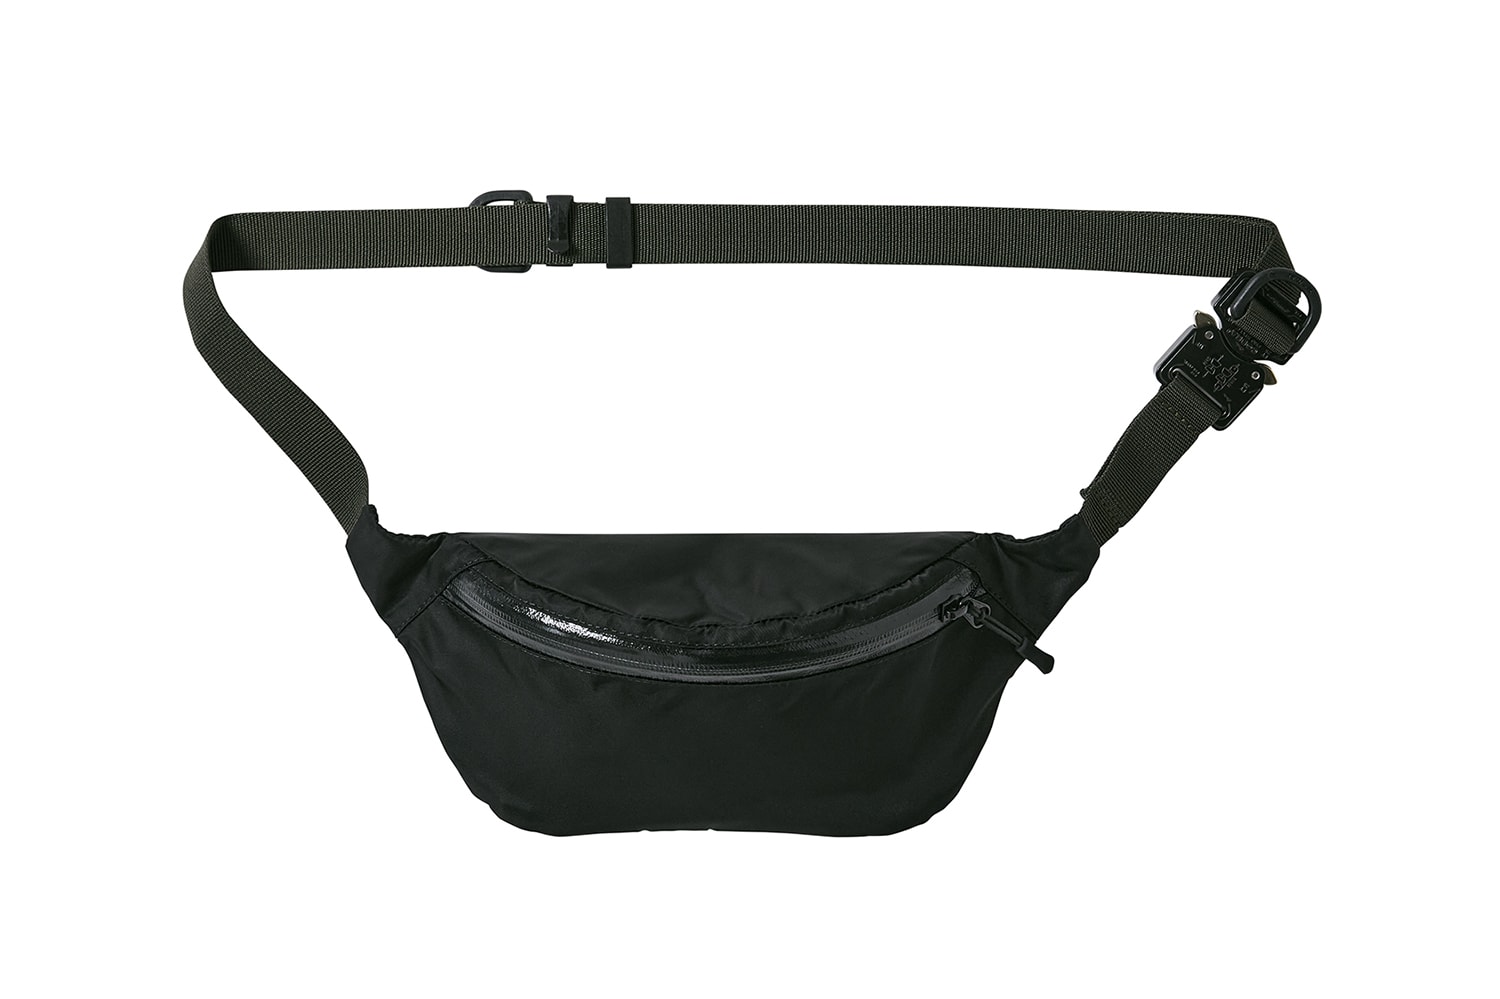 Bagjack x Eliminator Technical Bag Capsule nylon codura Cobra buckles waterproof Japan Nylon bags fanny packs belts packs hip bags fashion 